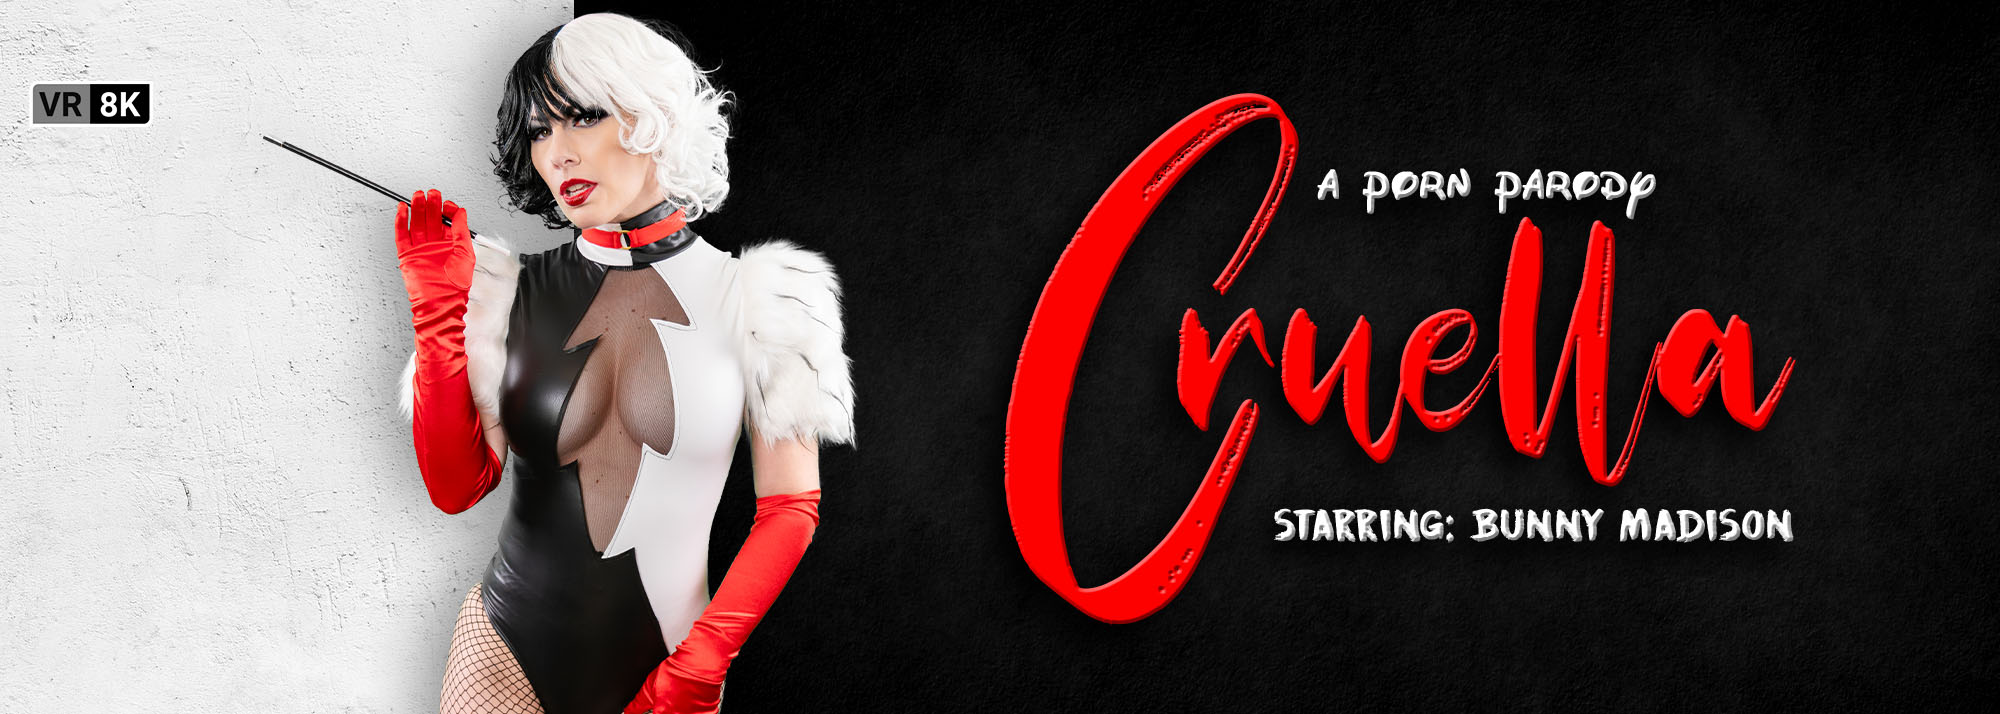 Cruella (A Porn Parody) - VR Video, Starring: Bunny Madison